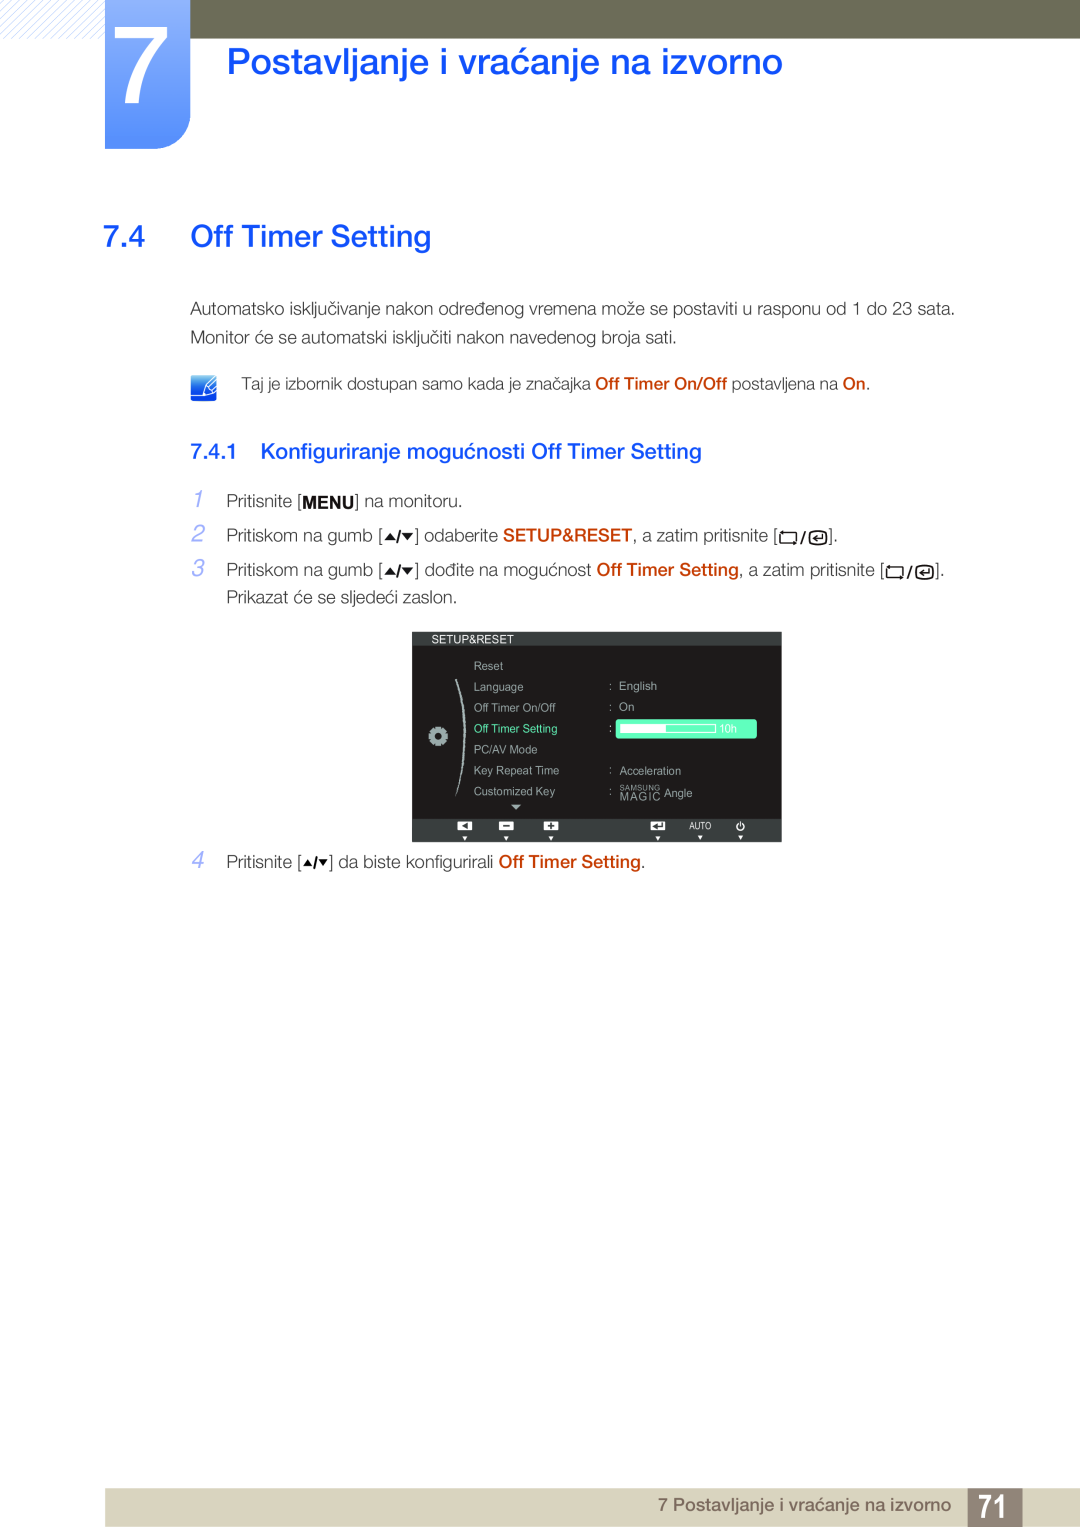 Samsung LF22TSWTBDN/EN, LF24TSWTBDN/EN Konfiguriranje mogućnosti Off Timer Setting, Postavljanje i vraćanje na izvorno 